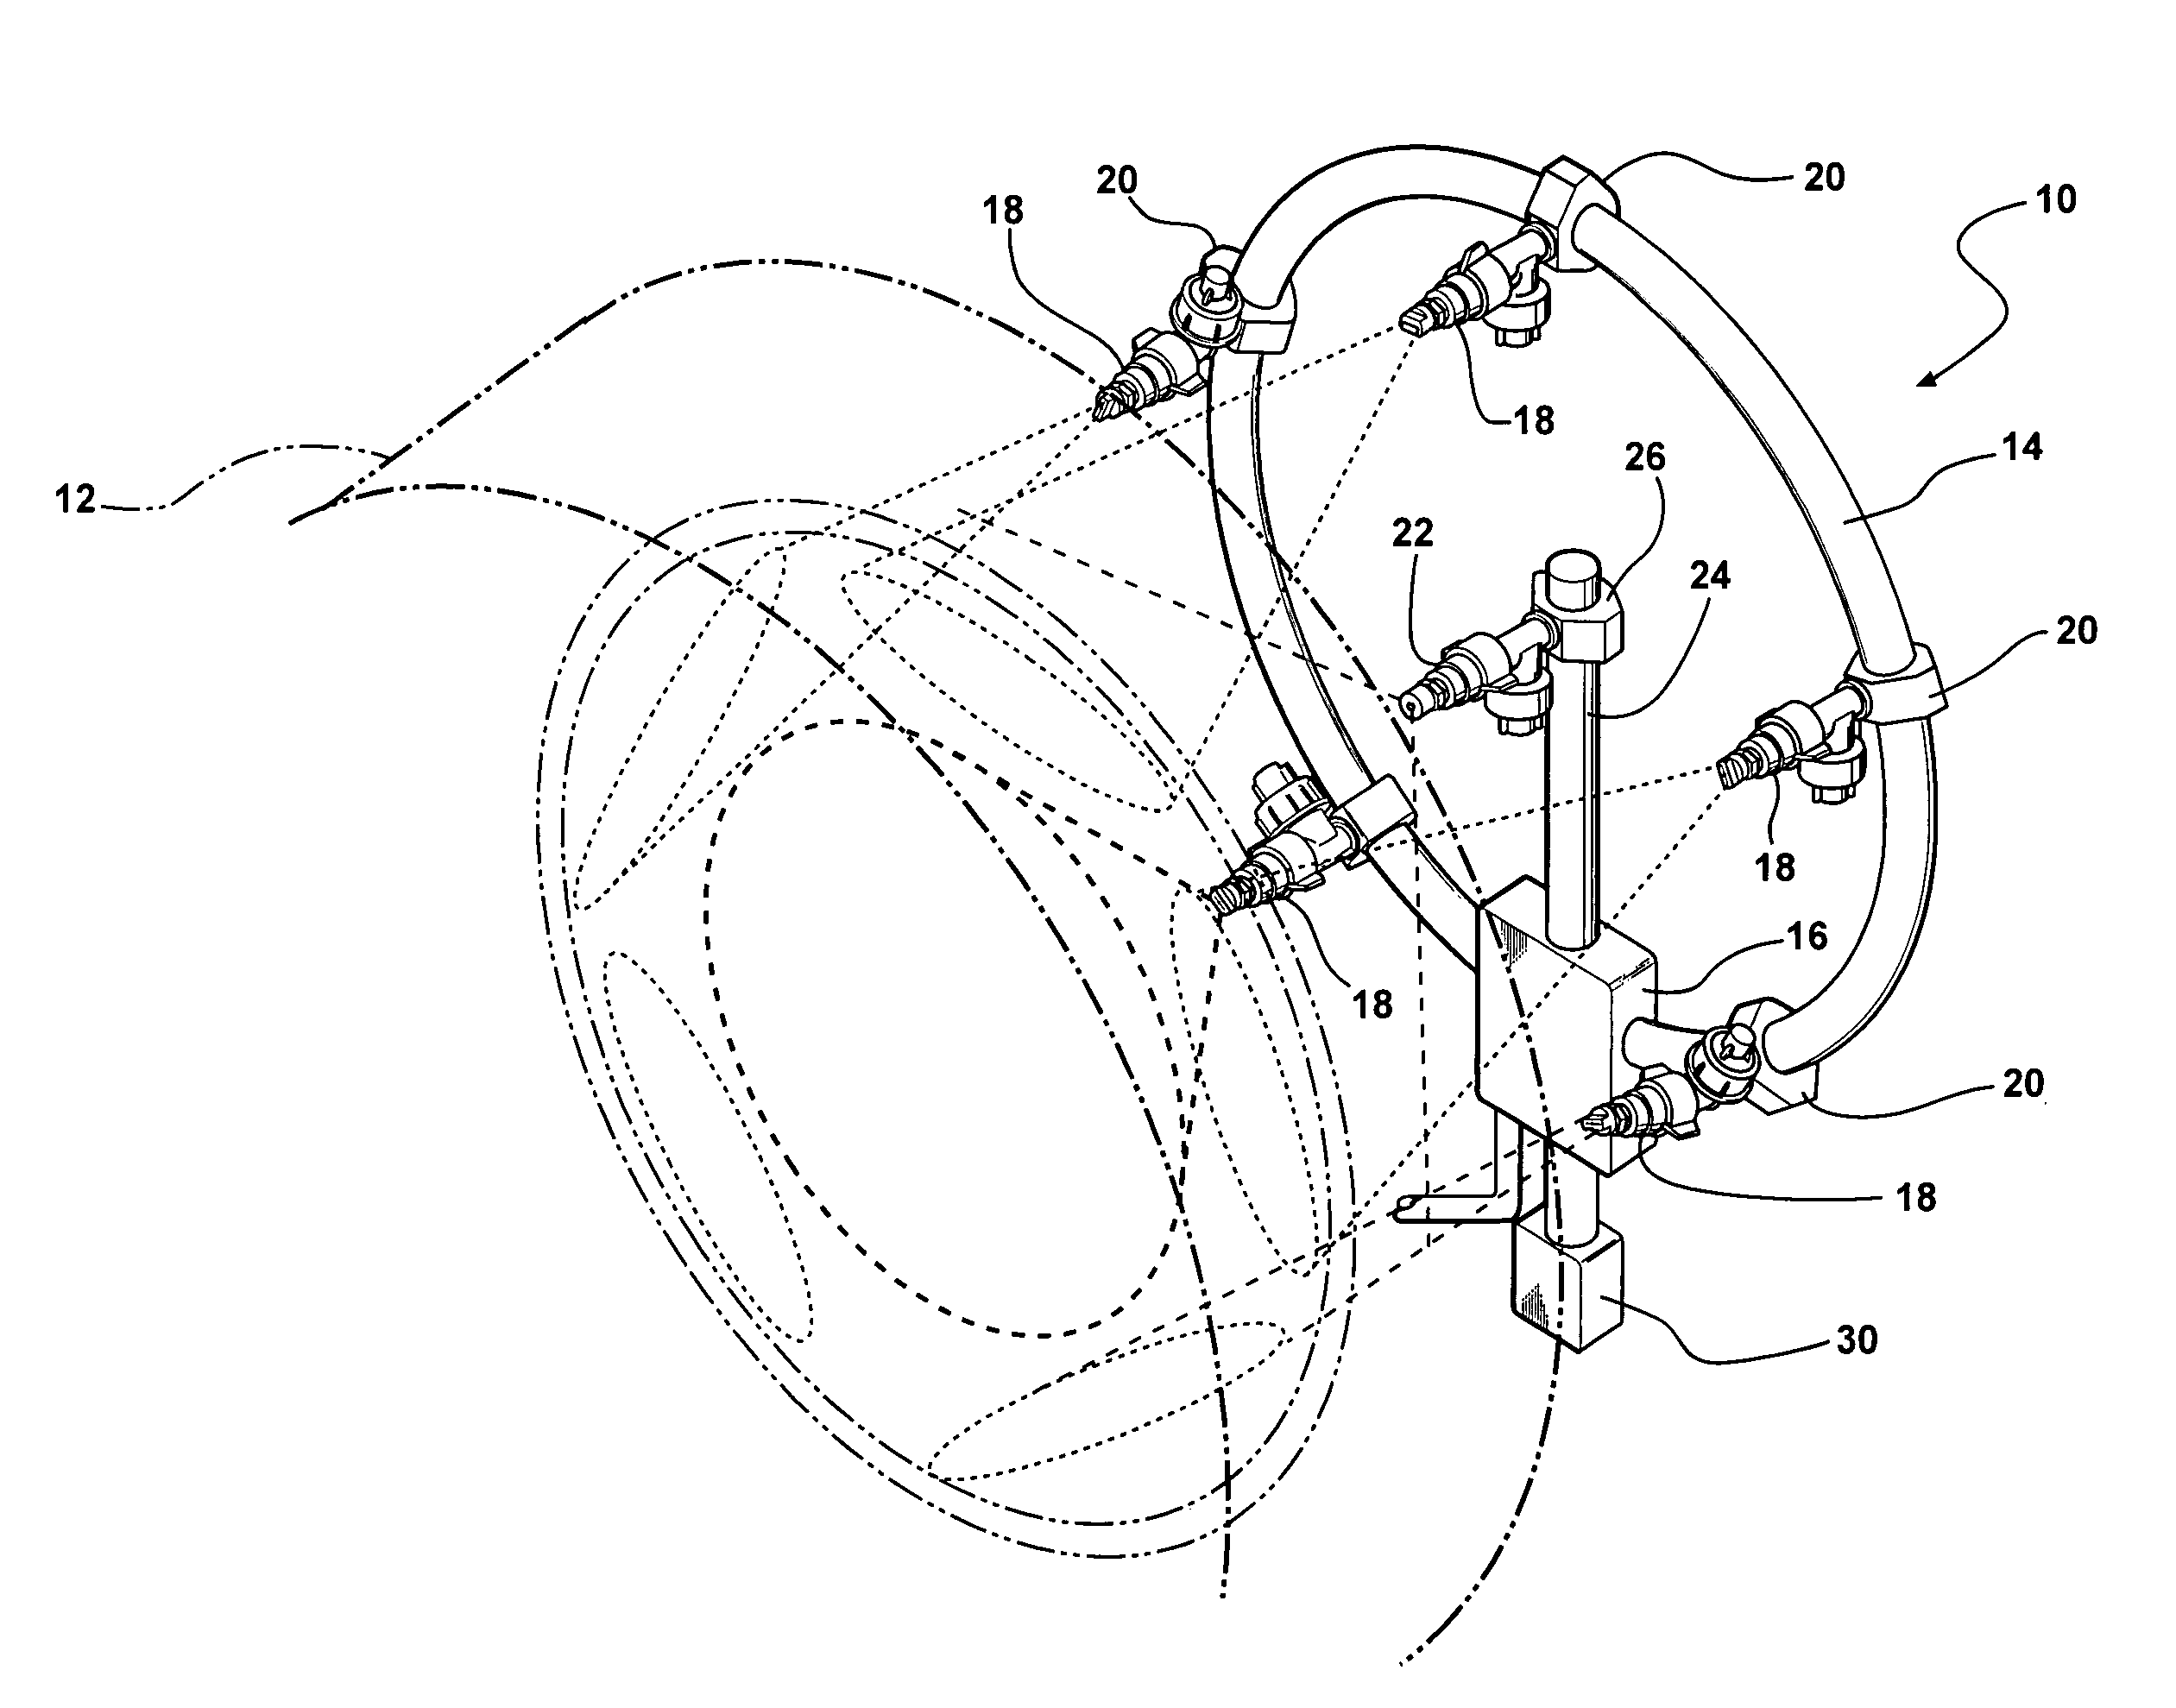 Spray-type automotive wheel washer